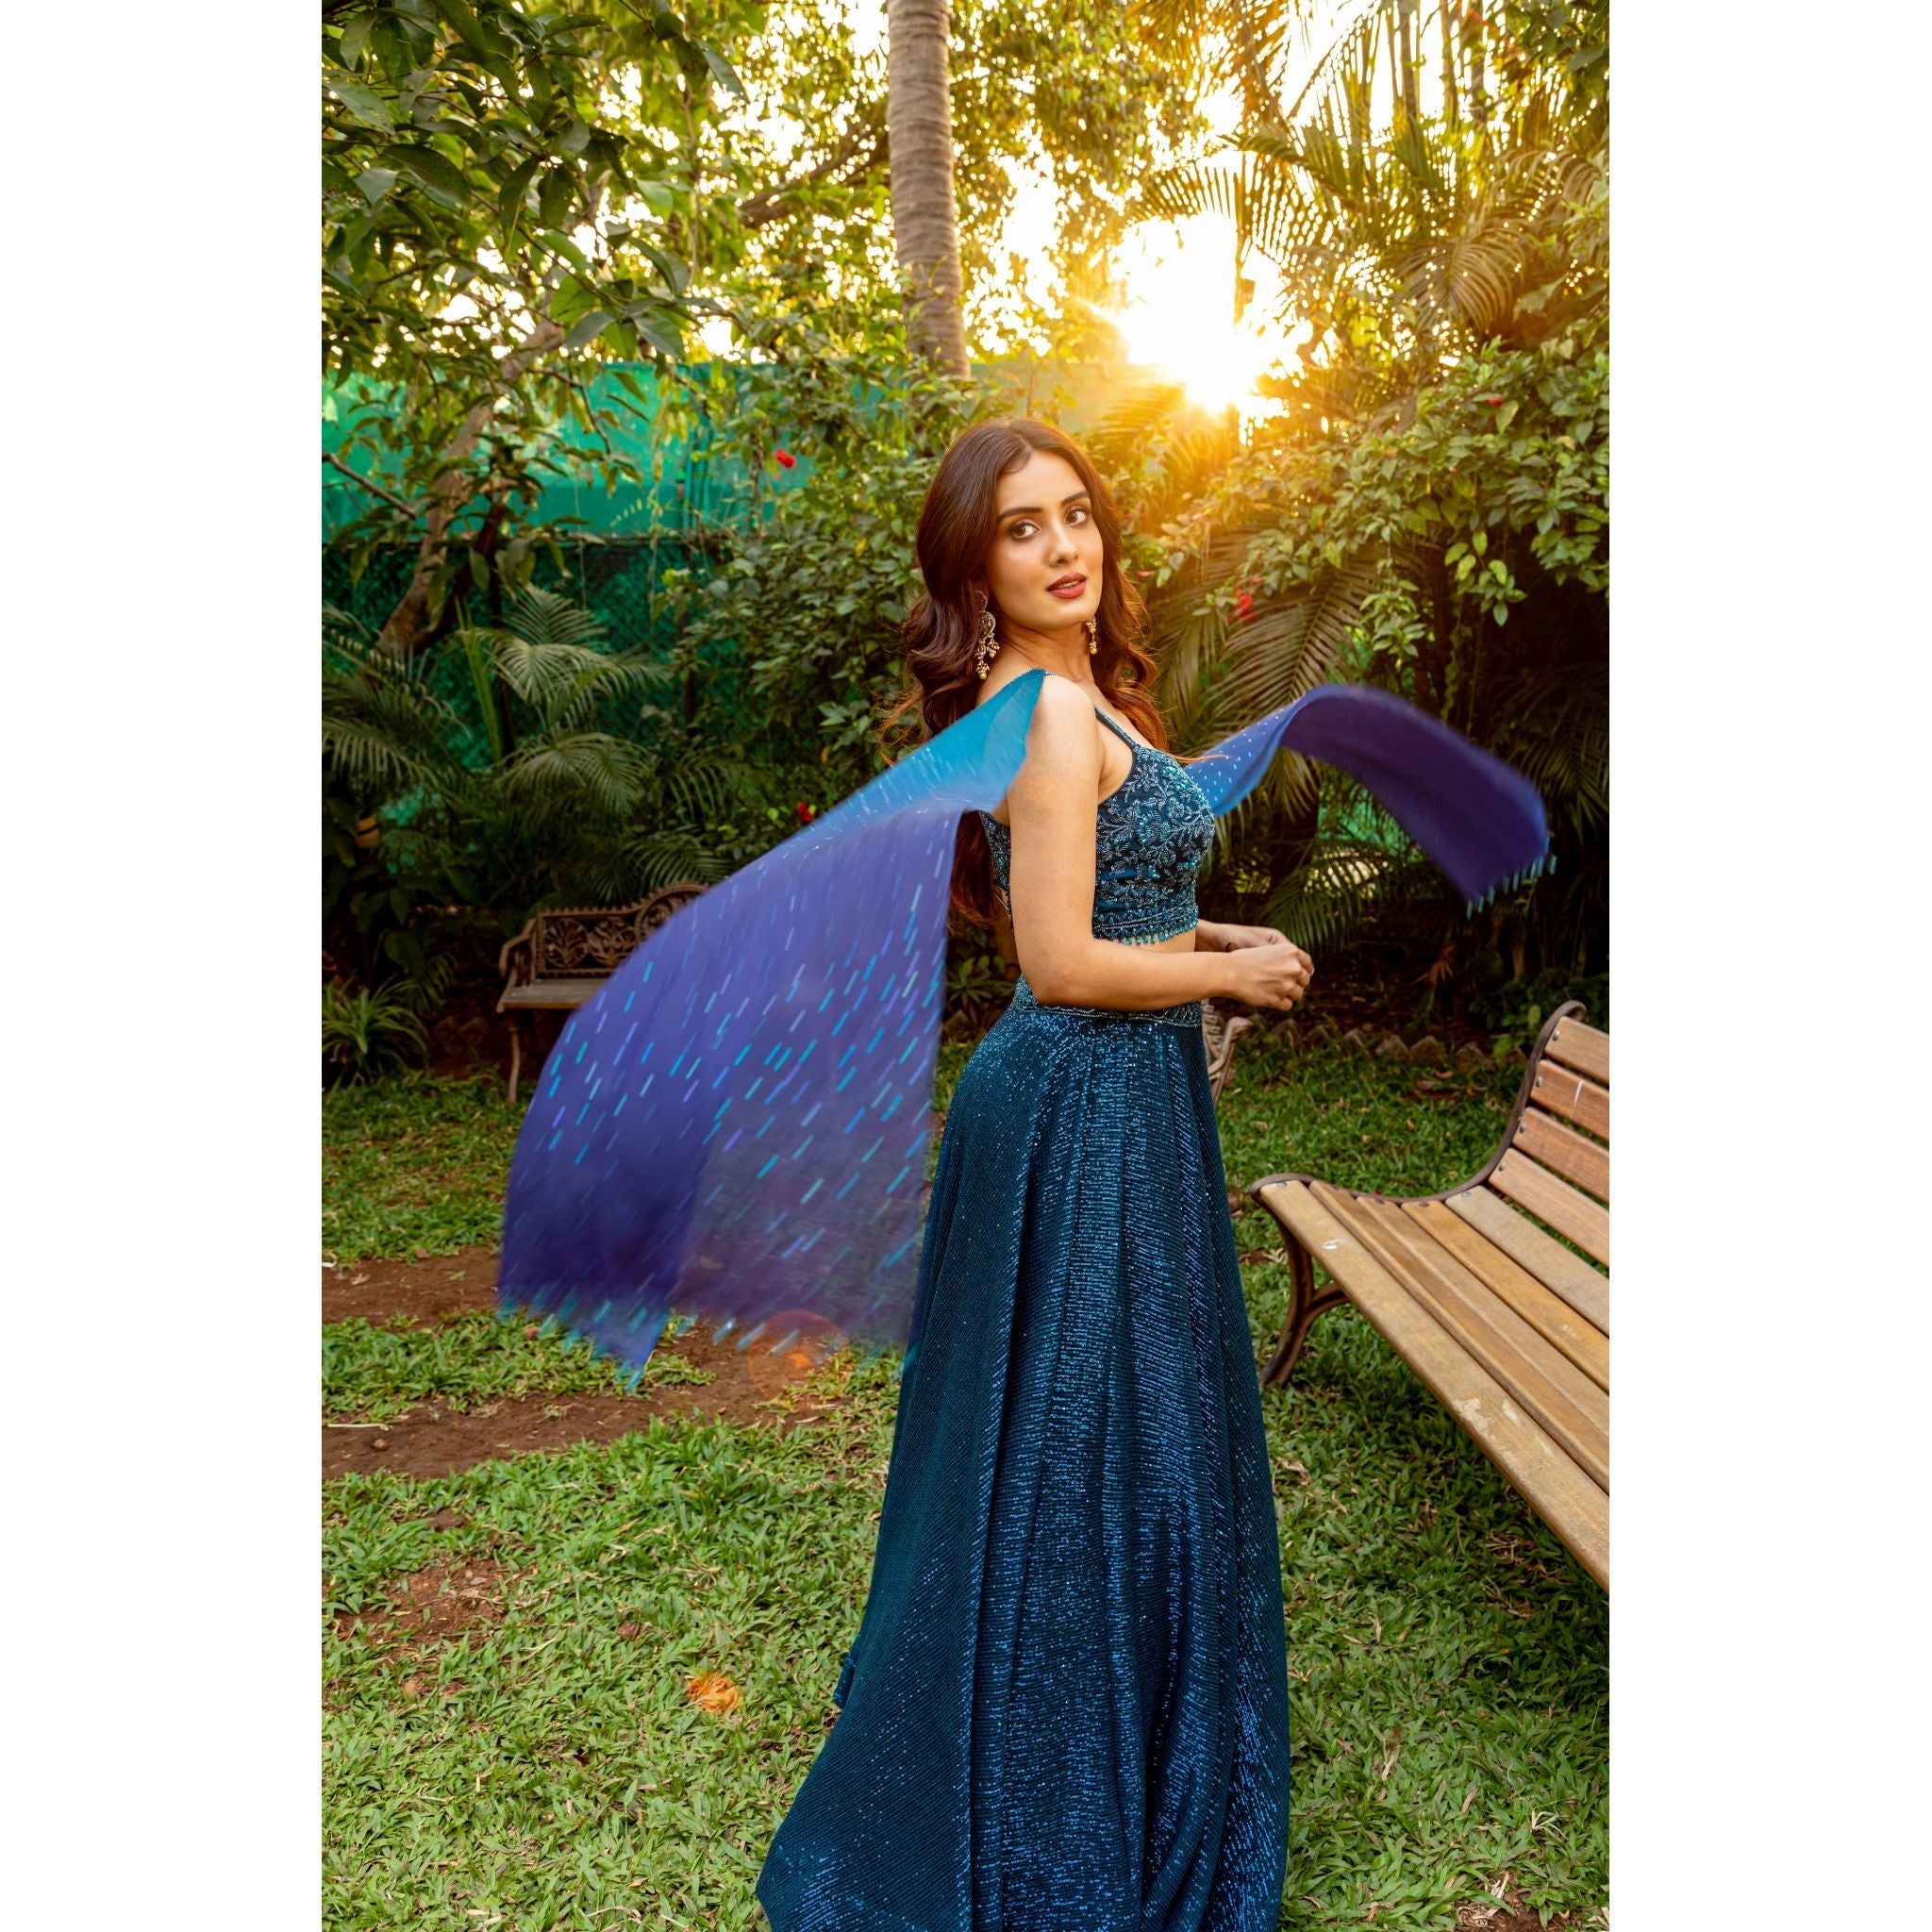 Teal Blue Linear Sequinned Lehenga Set - Indian Designer Bridal Wedding Outfit